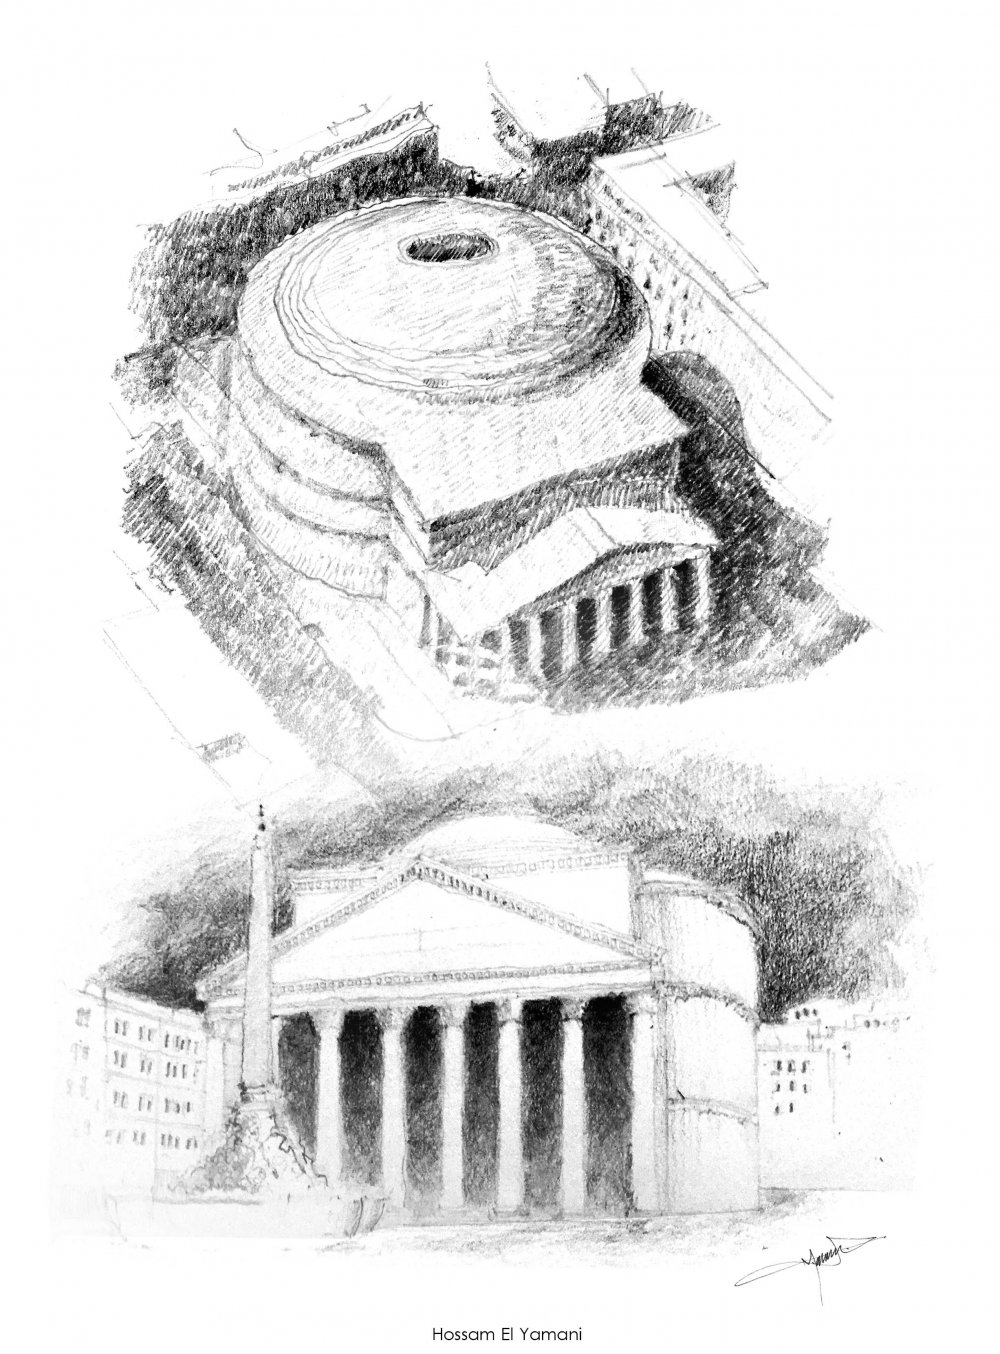 Храм Пантеон в Риме рисунок